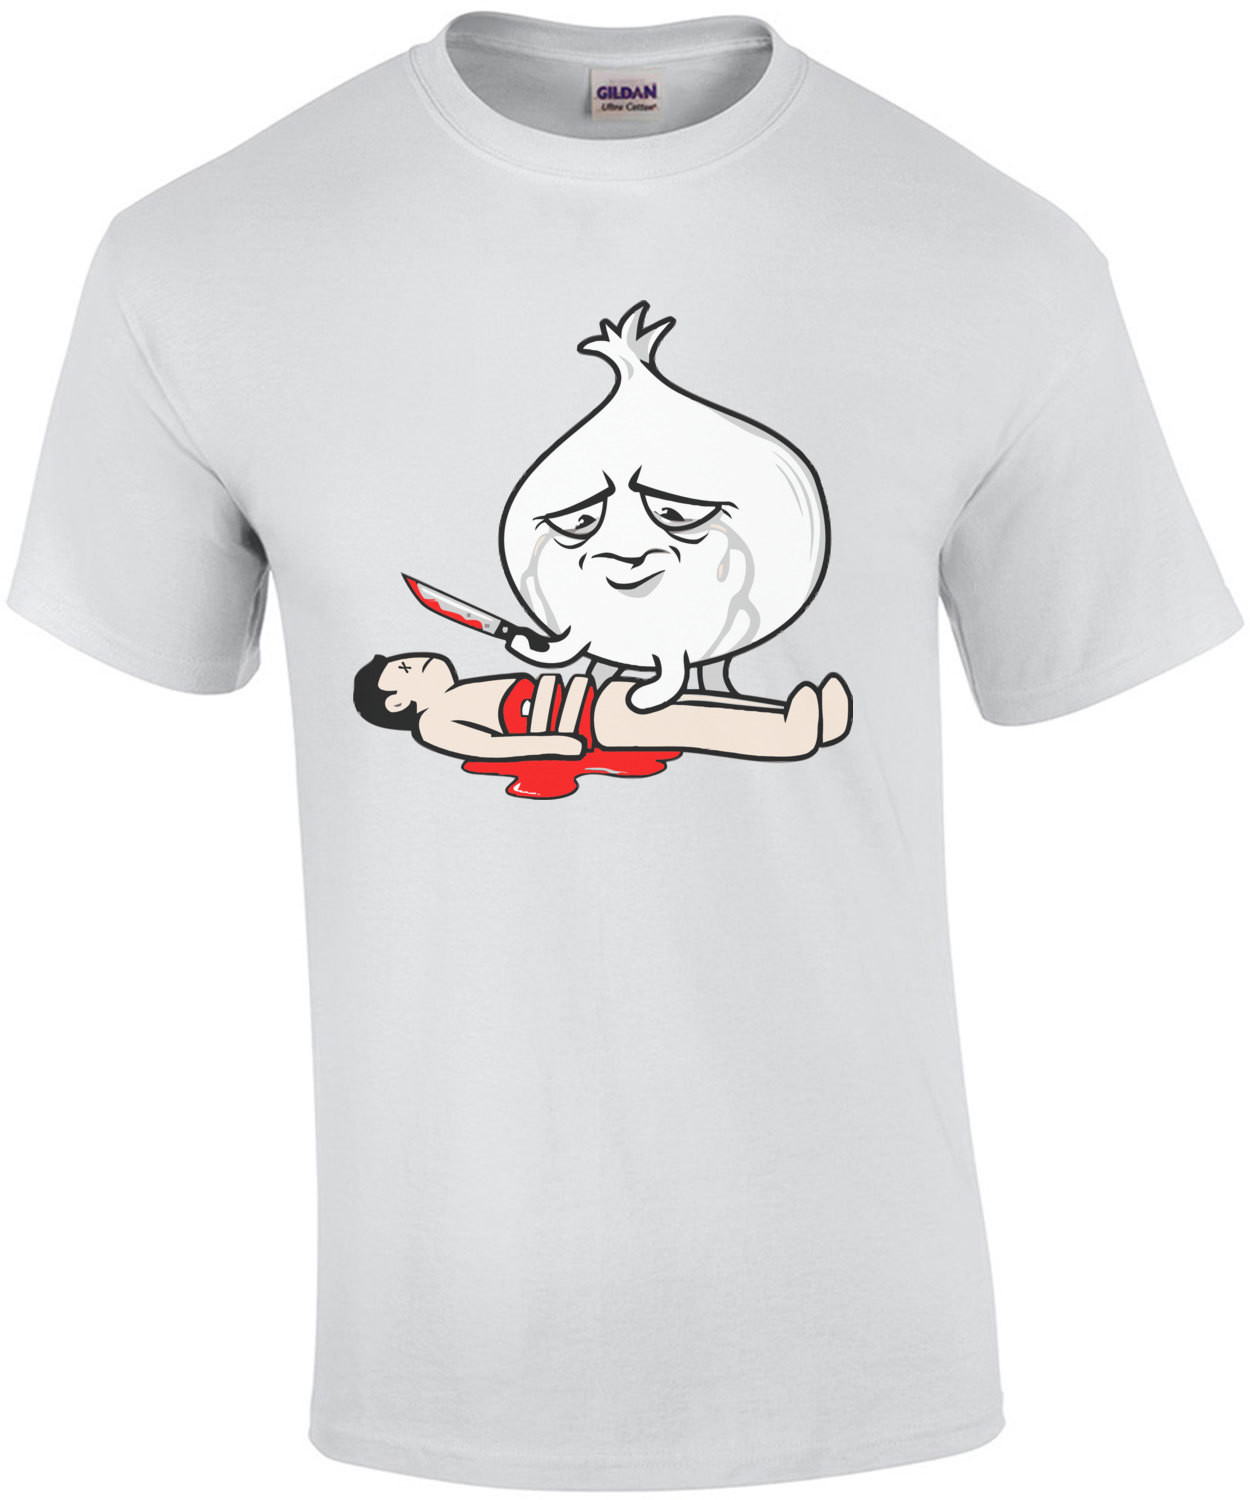 Sad Onion Cutting Human T-Shirt